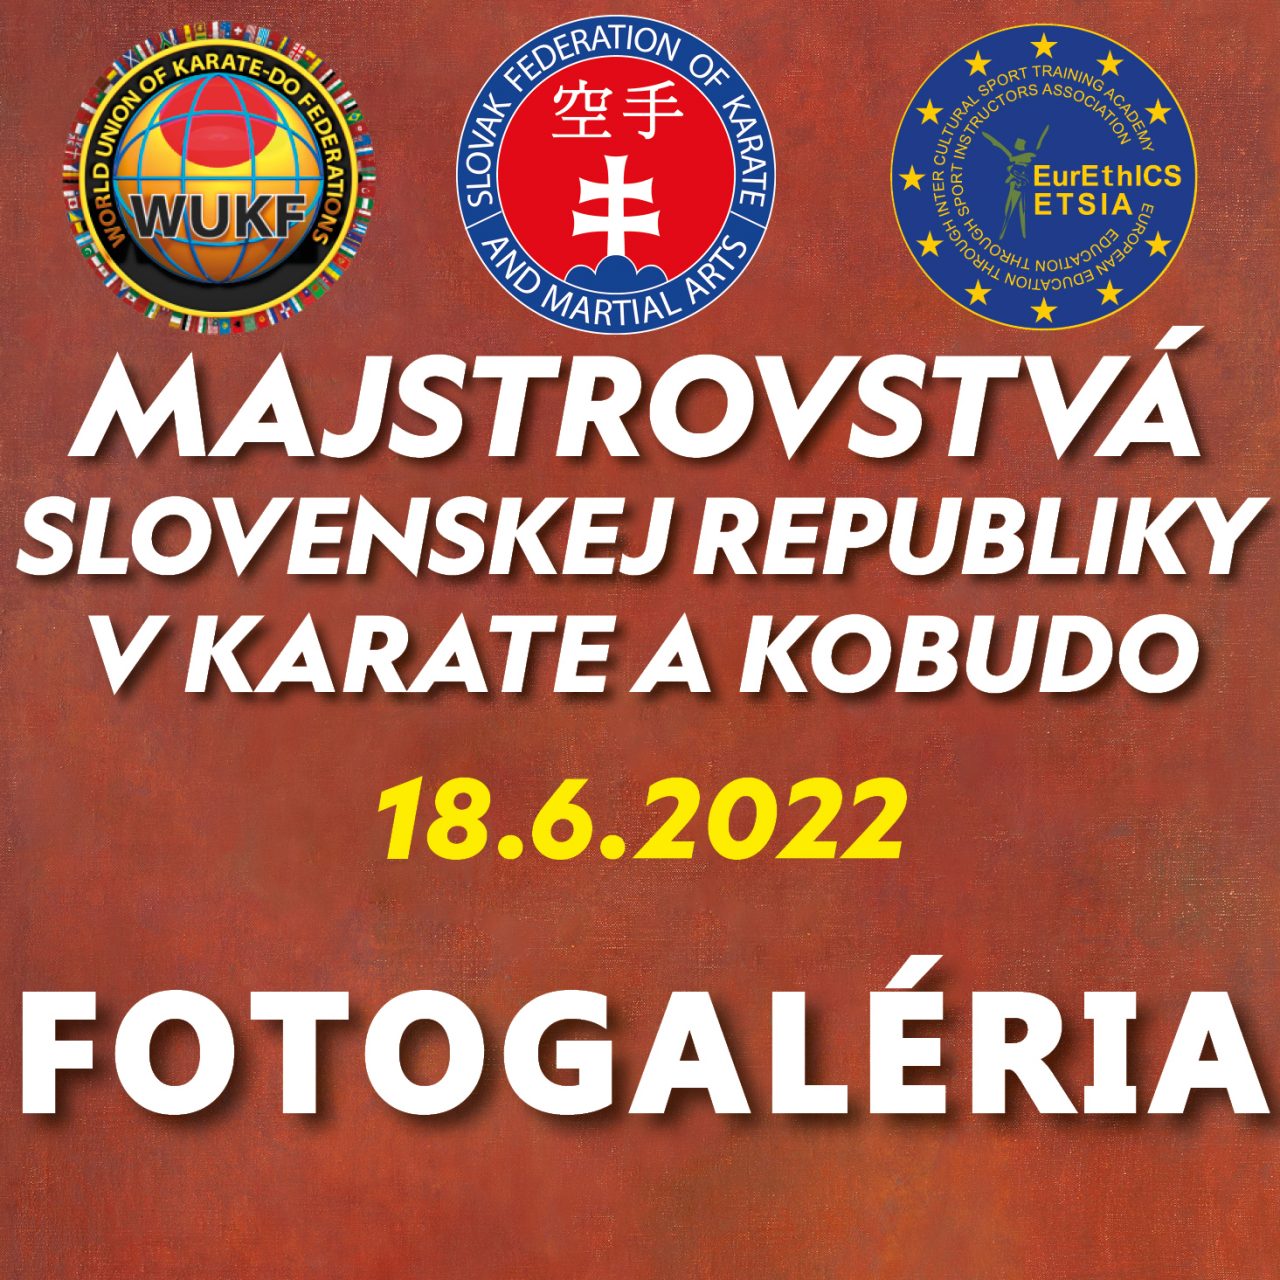 https://karate-slovakia.sk/wp-content/uploads/foto-1280x1280.jpg